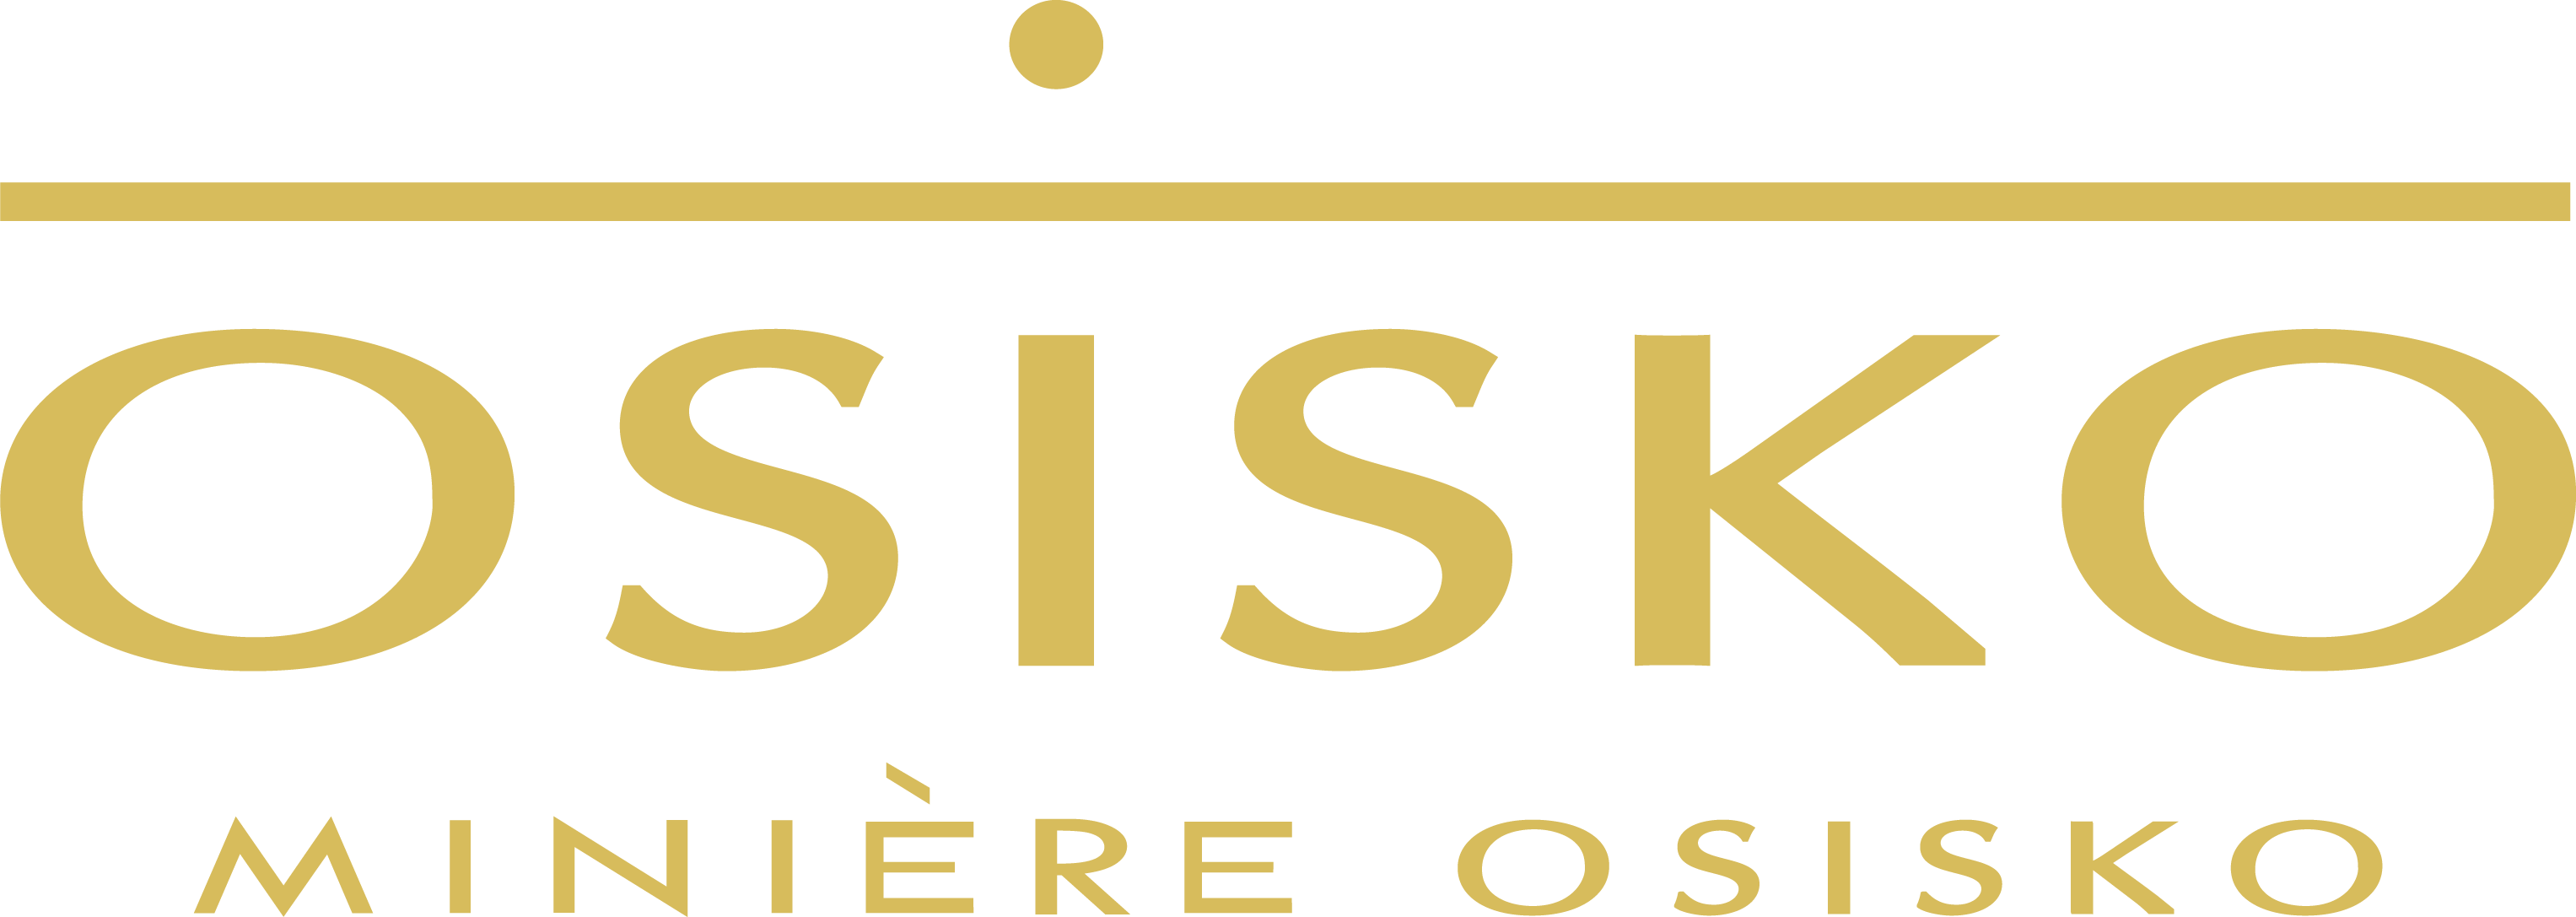 OSISKO-MIN-logo-CMYK@4x-FR